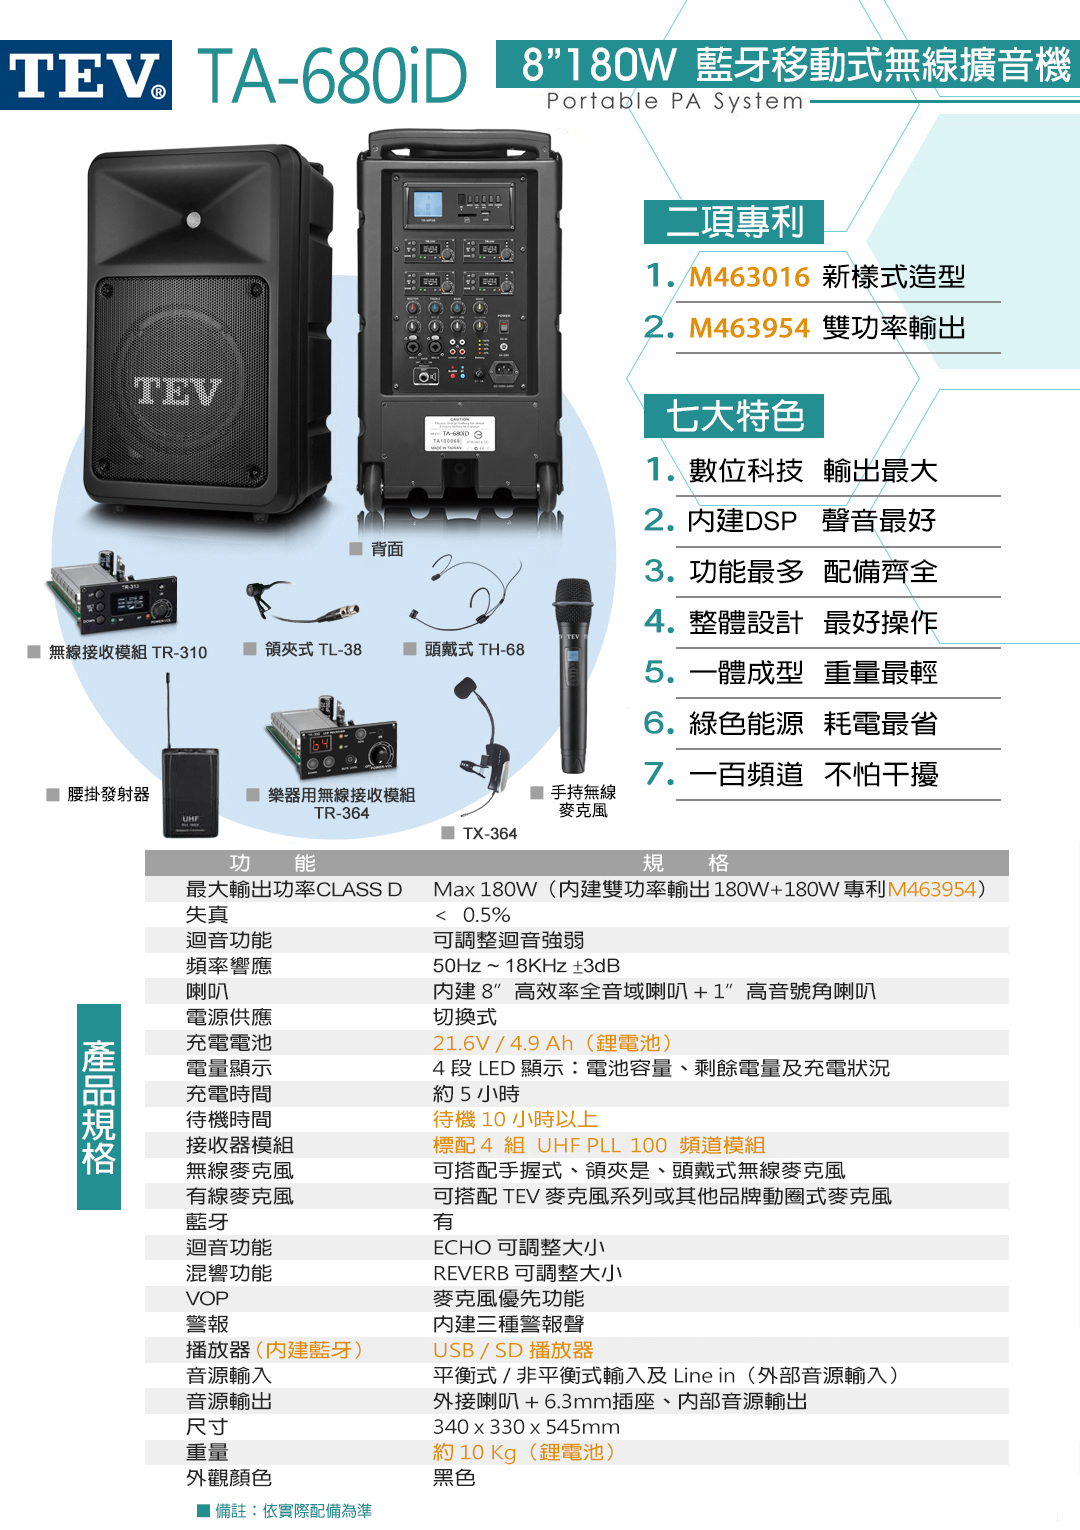 TA-60D 8180W 藍牙移動式無線擴音機Portable PA SystemTEV00000二項專利1.M463016 新樣式造型2. M463954 雙功率輸出七大特色1.數位科技 輸出最大2.DSP 聲音最好 背面3.功最多 配備齊全4.整體設計 最好操作 無線接收模組 TR-310  式 TL-38 頭戴式 TH-685.一體成型 重量最輕6.綠色能源 耗電最省7.一百頻道 不怕干擾TB-300 樂用無線接收模組TR-364TM-8100TX-364功能最大輸出功率CLASS D失真迴音功能頻率響應喇叭電源供應充電電池電量顯示充電時間待機時間接收器模組無線麥克風有線麥克風藍牙迴音功能混響功能VOP警報播放器(內建藍牙)音源輸入音源輸出規格Max 180W(內建雙功率輸出180W+180W專利M463954) 0.5%可調整迴音強弱50Hz~18KHz±3dB內建8高效率全音域喇叭+1高音號角喇叭切換式11.1V/5200mAh(電池)x24 段 LED 顯示:電池容量、剩餘電量及充電狀況約5小時待機10小時以上標配4 組 UHF PLL 100 頻道模組可搭配手握式、領夾是、頭戴式無線麥克風可搭配 TEV 麥克風系列或其他品牌動圈式麥克風有ECHO 可調整大小REVERB 可調整大小麥克風優先功能内建三種警報聲USB/SD 播放器平衡式/非平衡式輸入及 Line in(外部音源輸入)外接喇叭+6.3mm插座、内部音源輸出340 x 330 x 545mm尺寸重量約11 Kg(鋰電池)外觀顏色黑色 備註:依實際配備為準